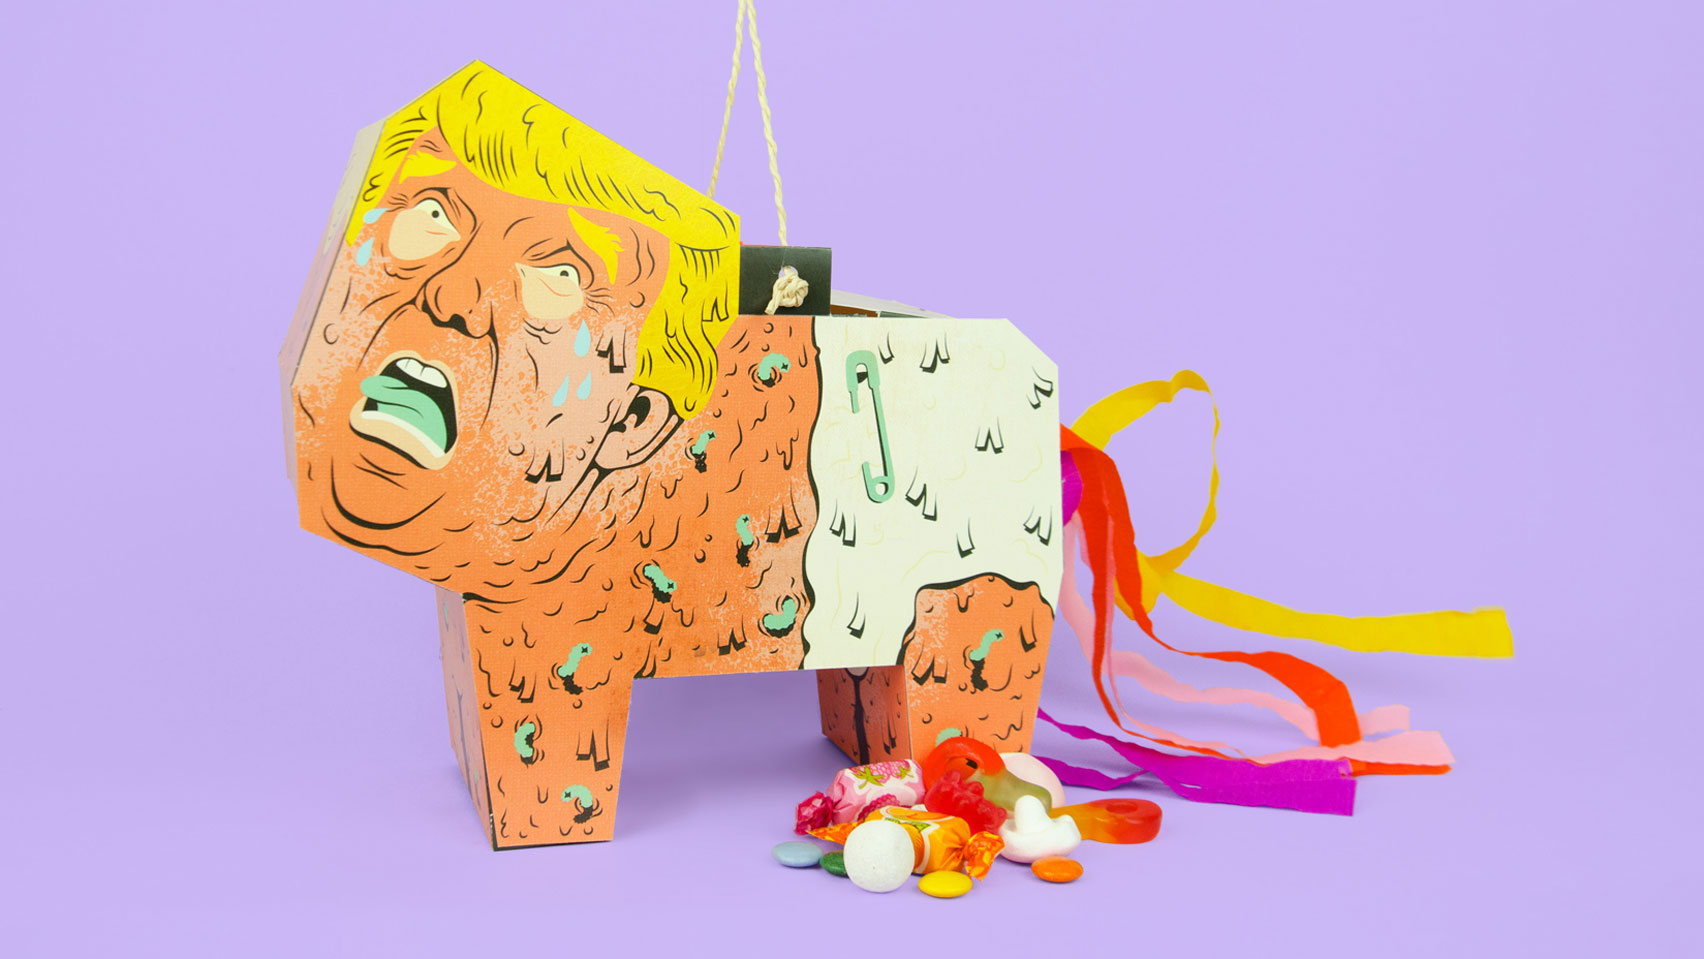 Revenge of the Mexican – The DIY Donald Trump Piñata by Caty Aguilera